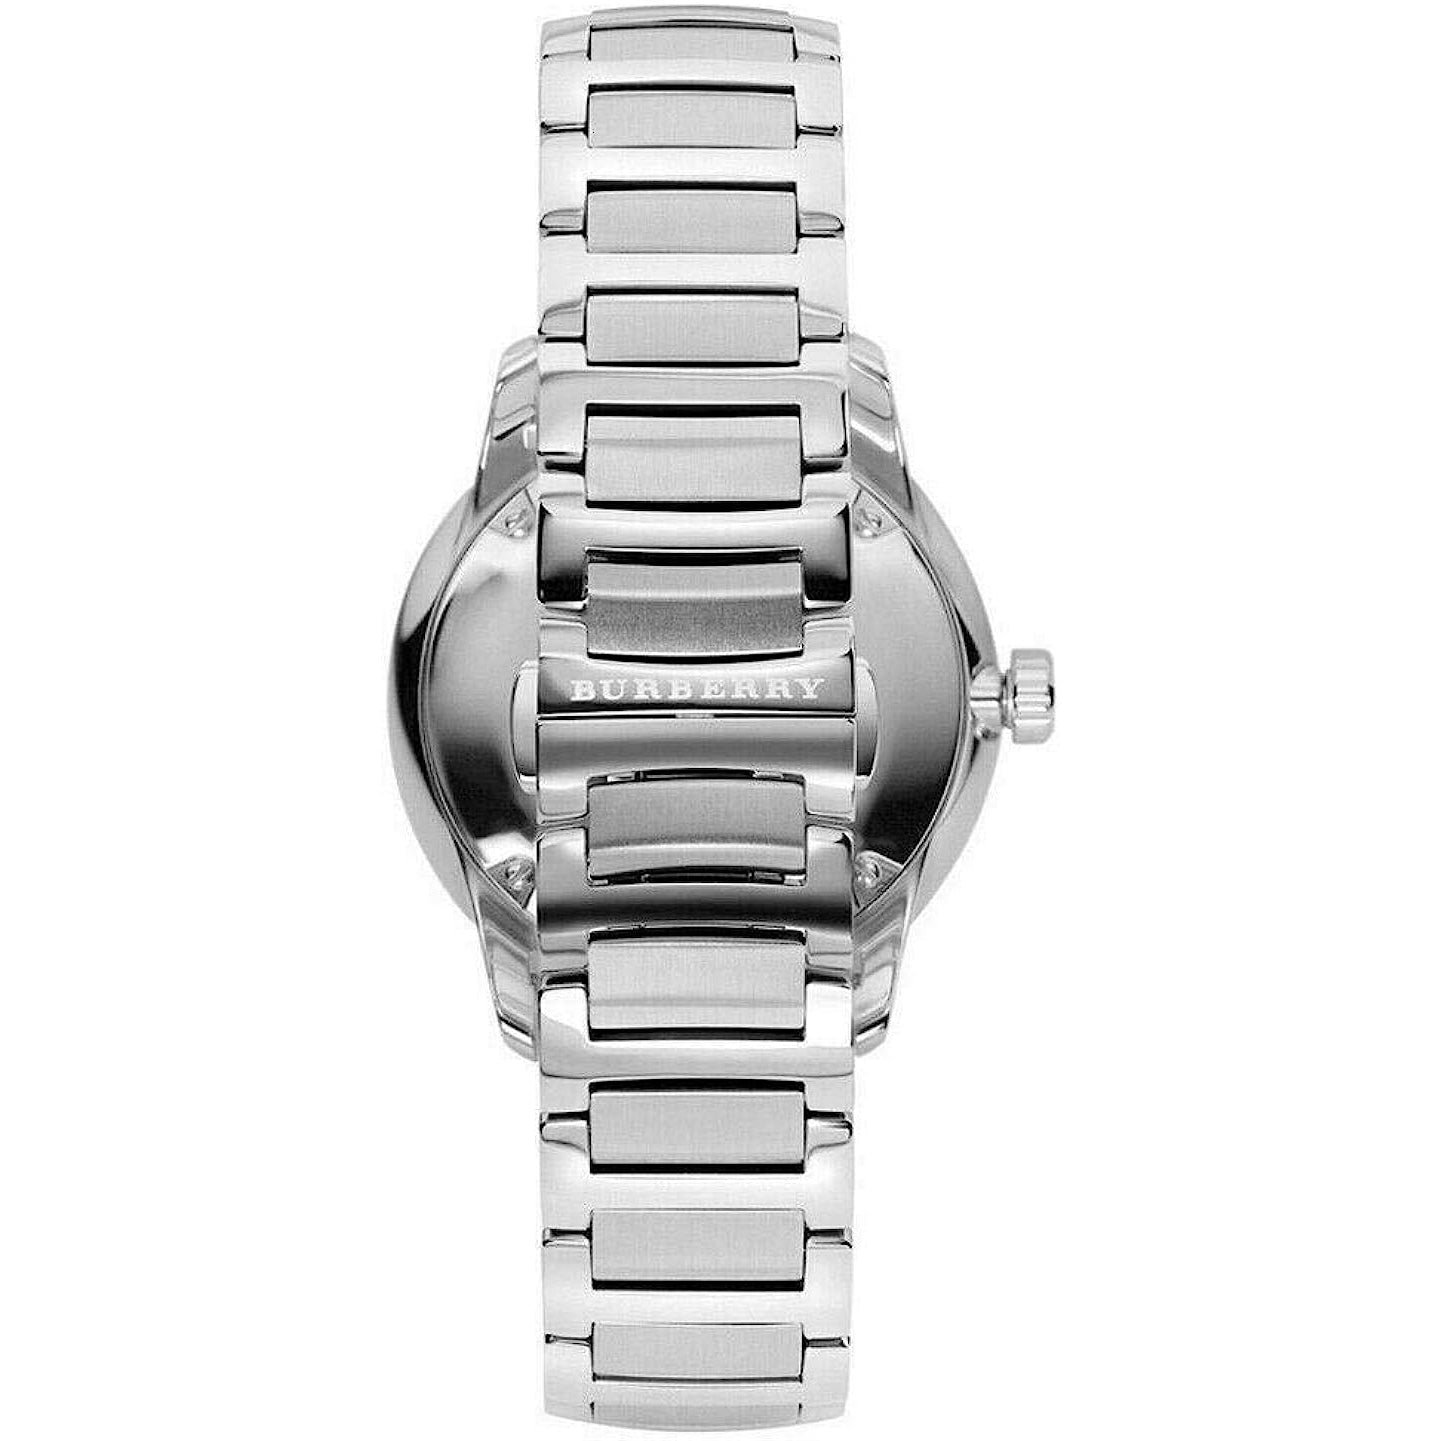 Burberry The Classic Men's Silver Watch BU10005